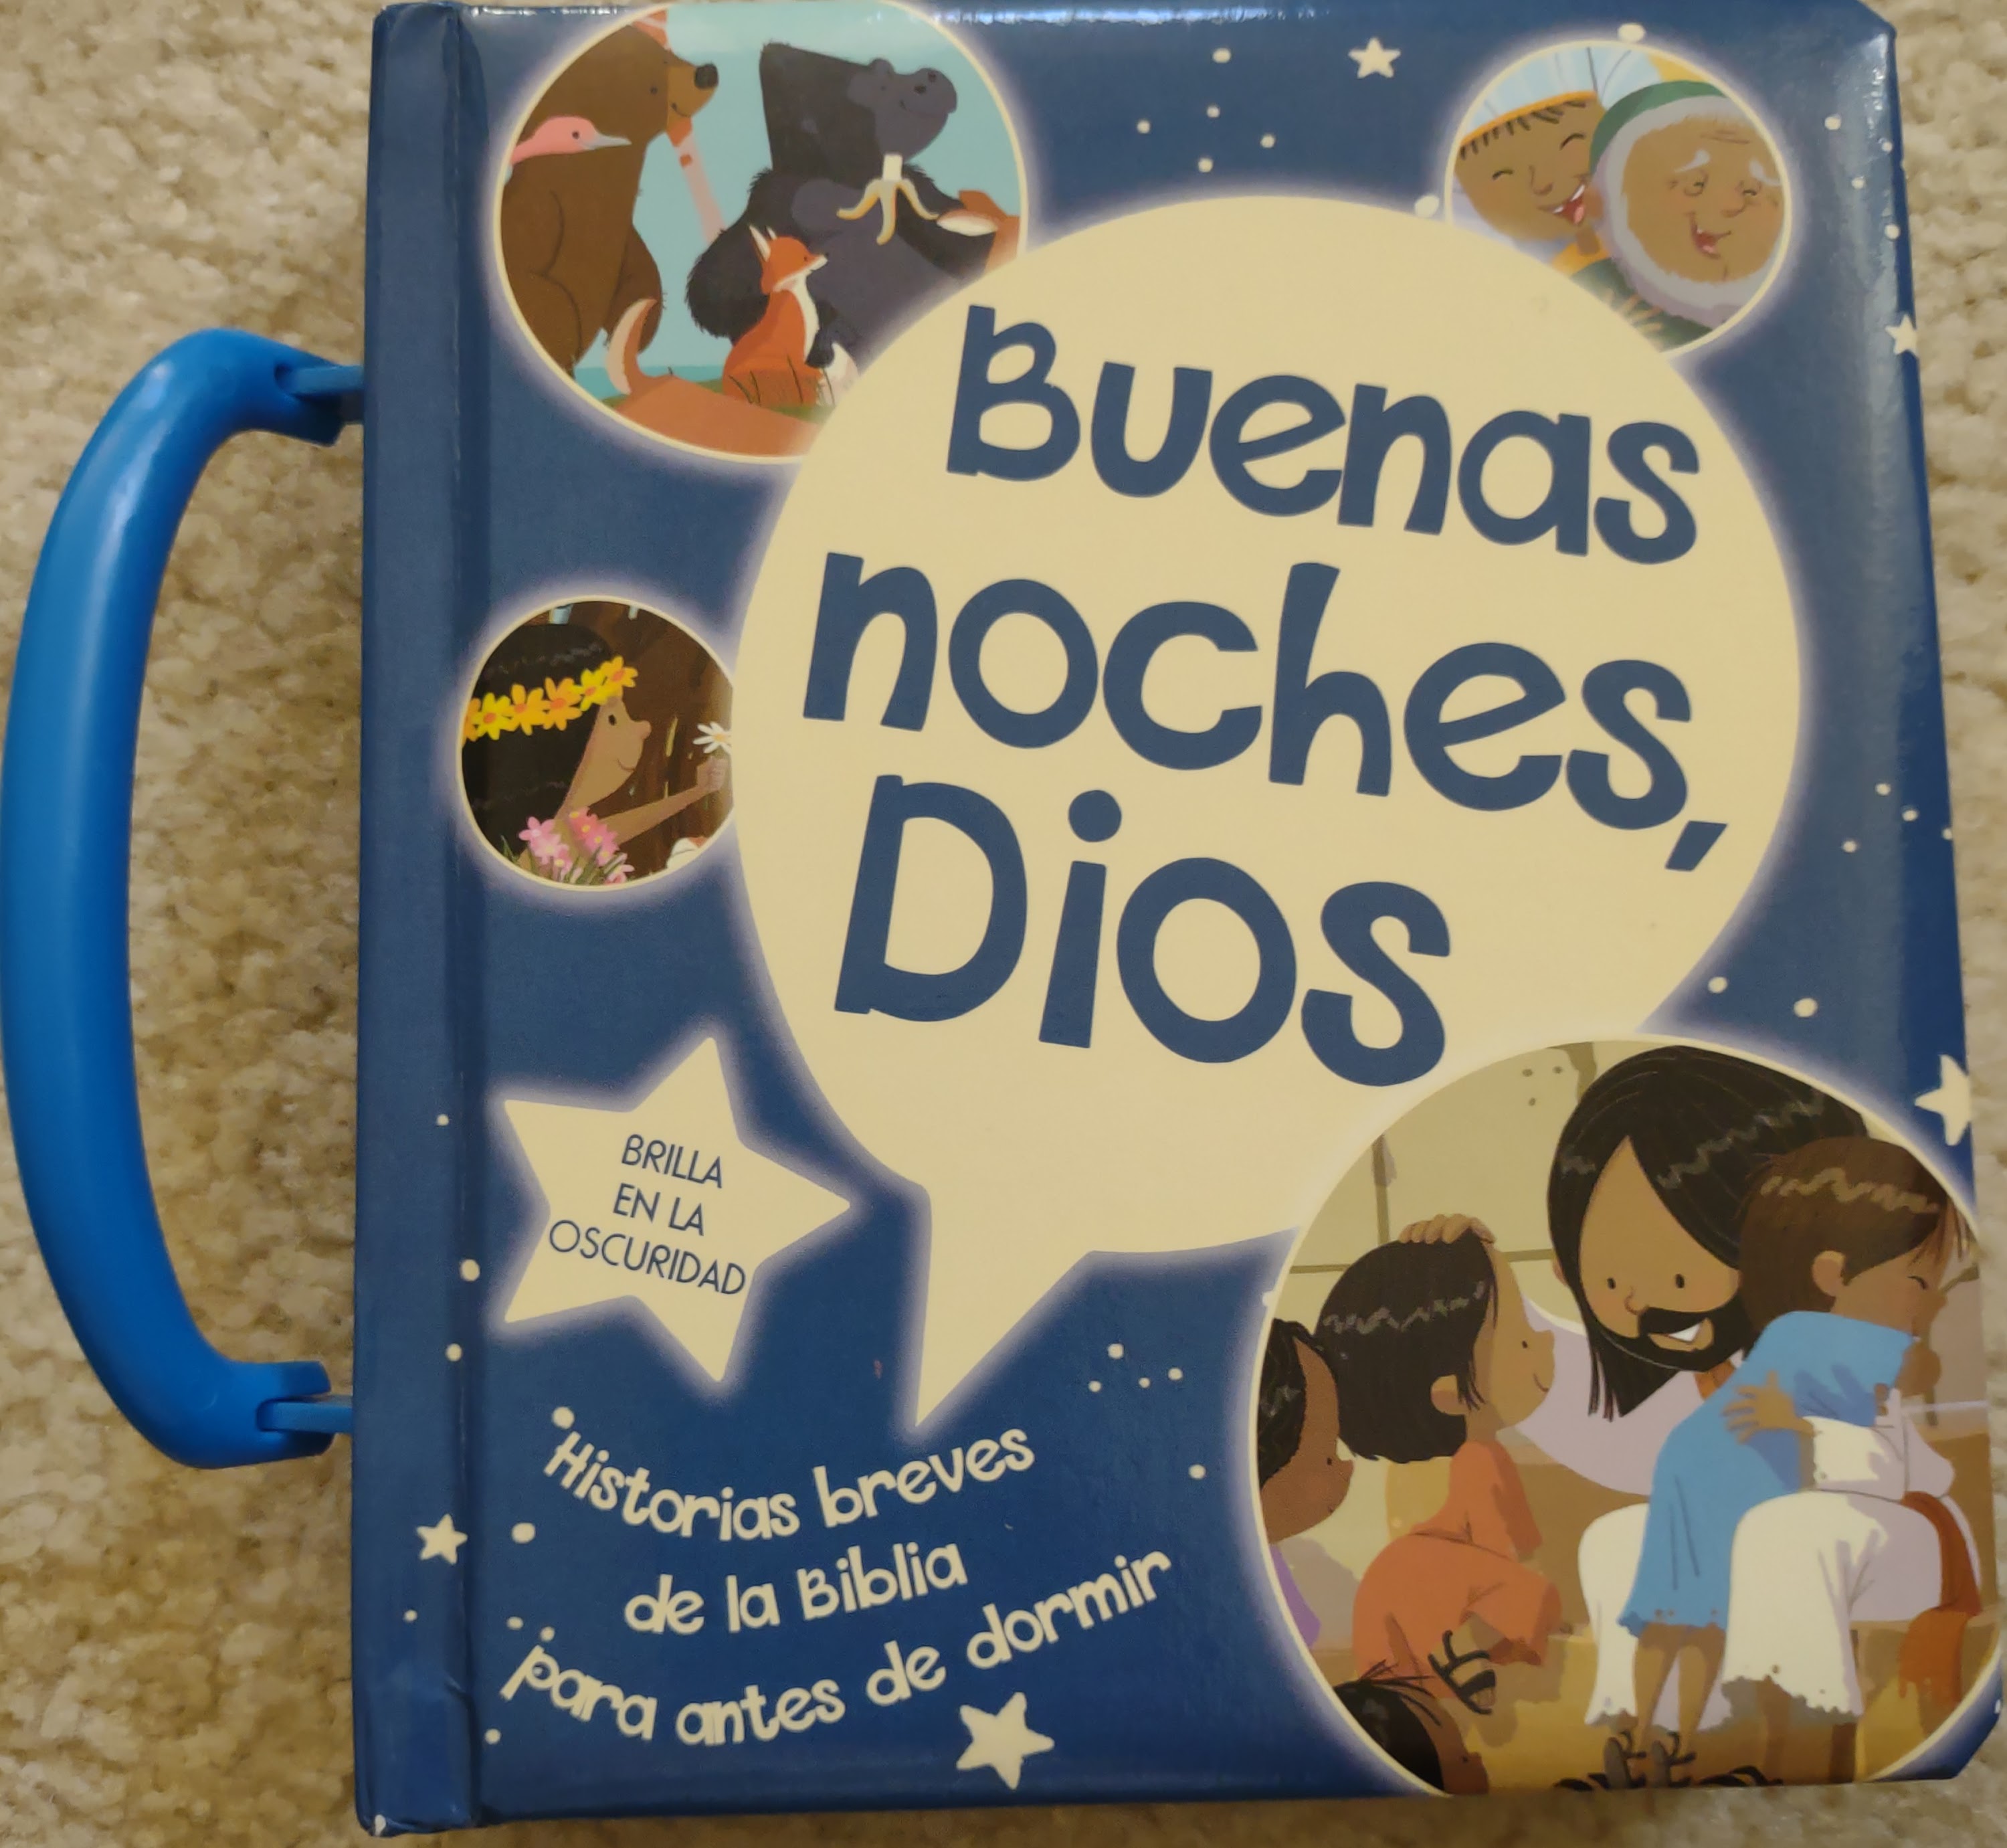 Spanish Christian books